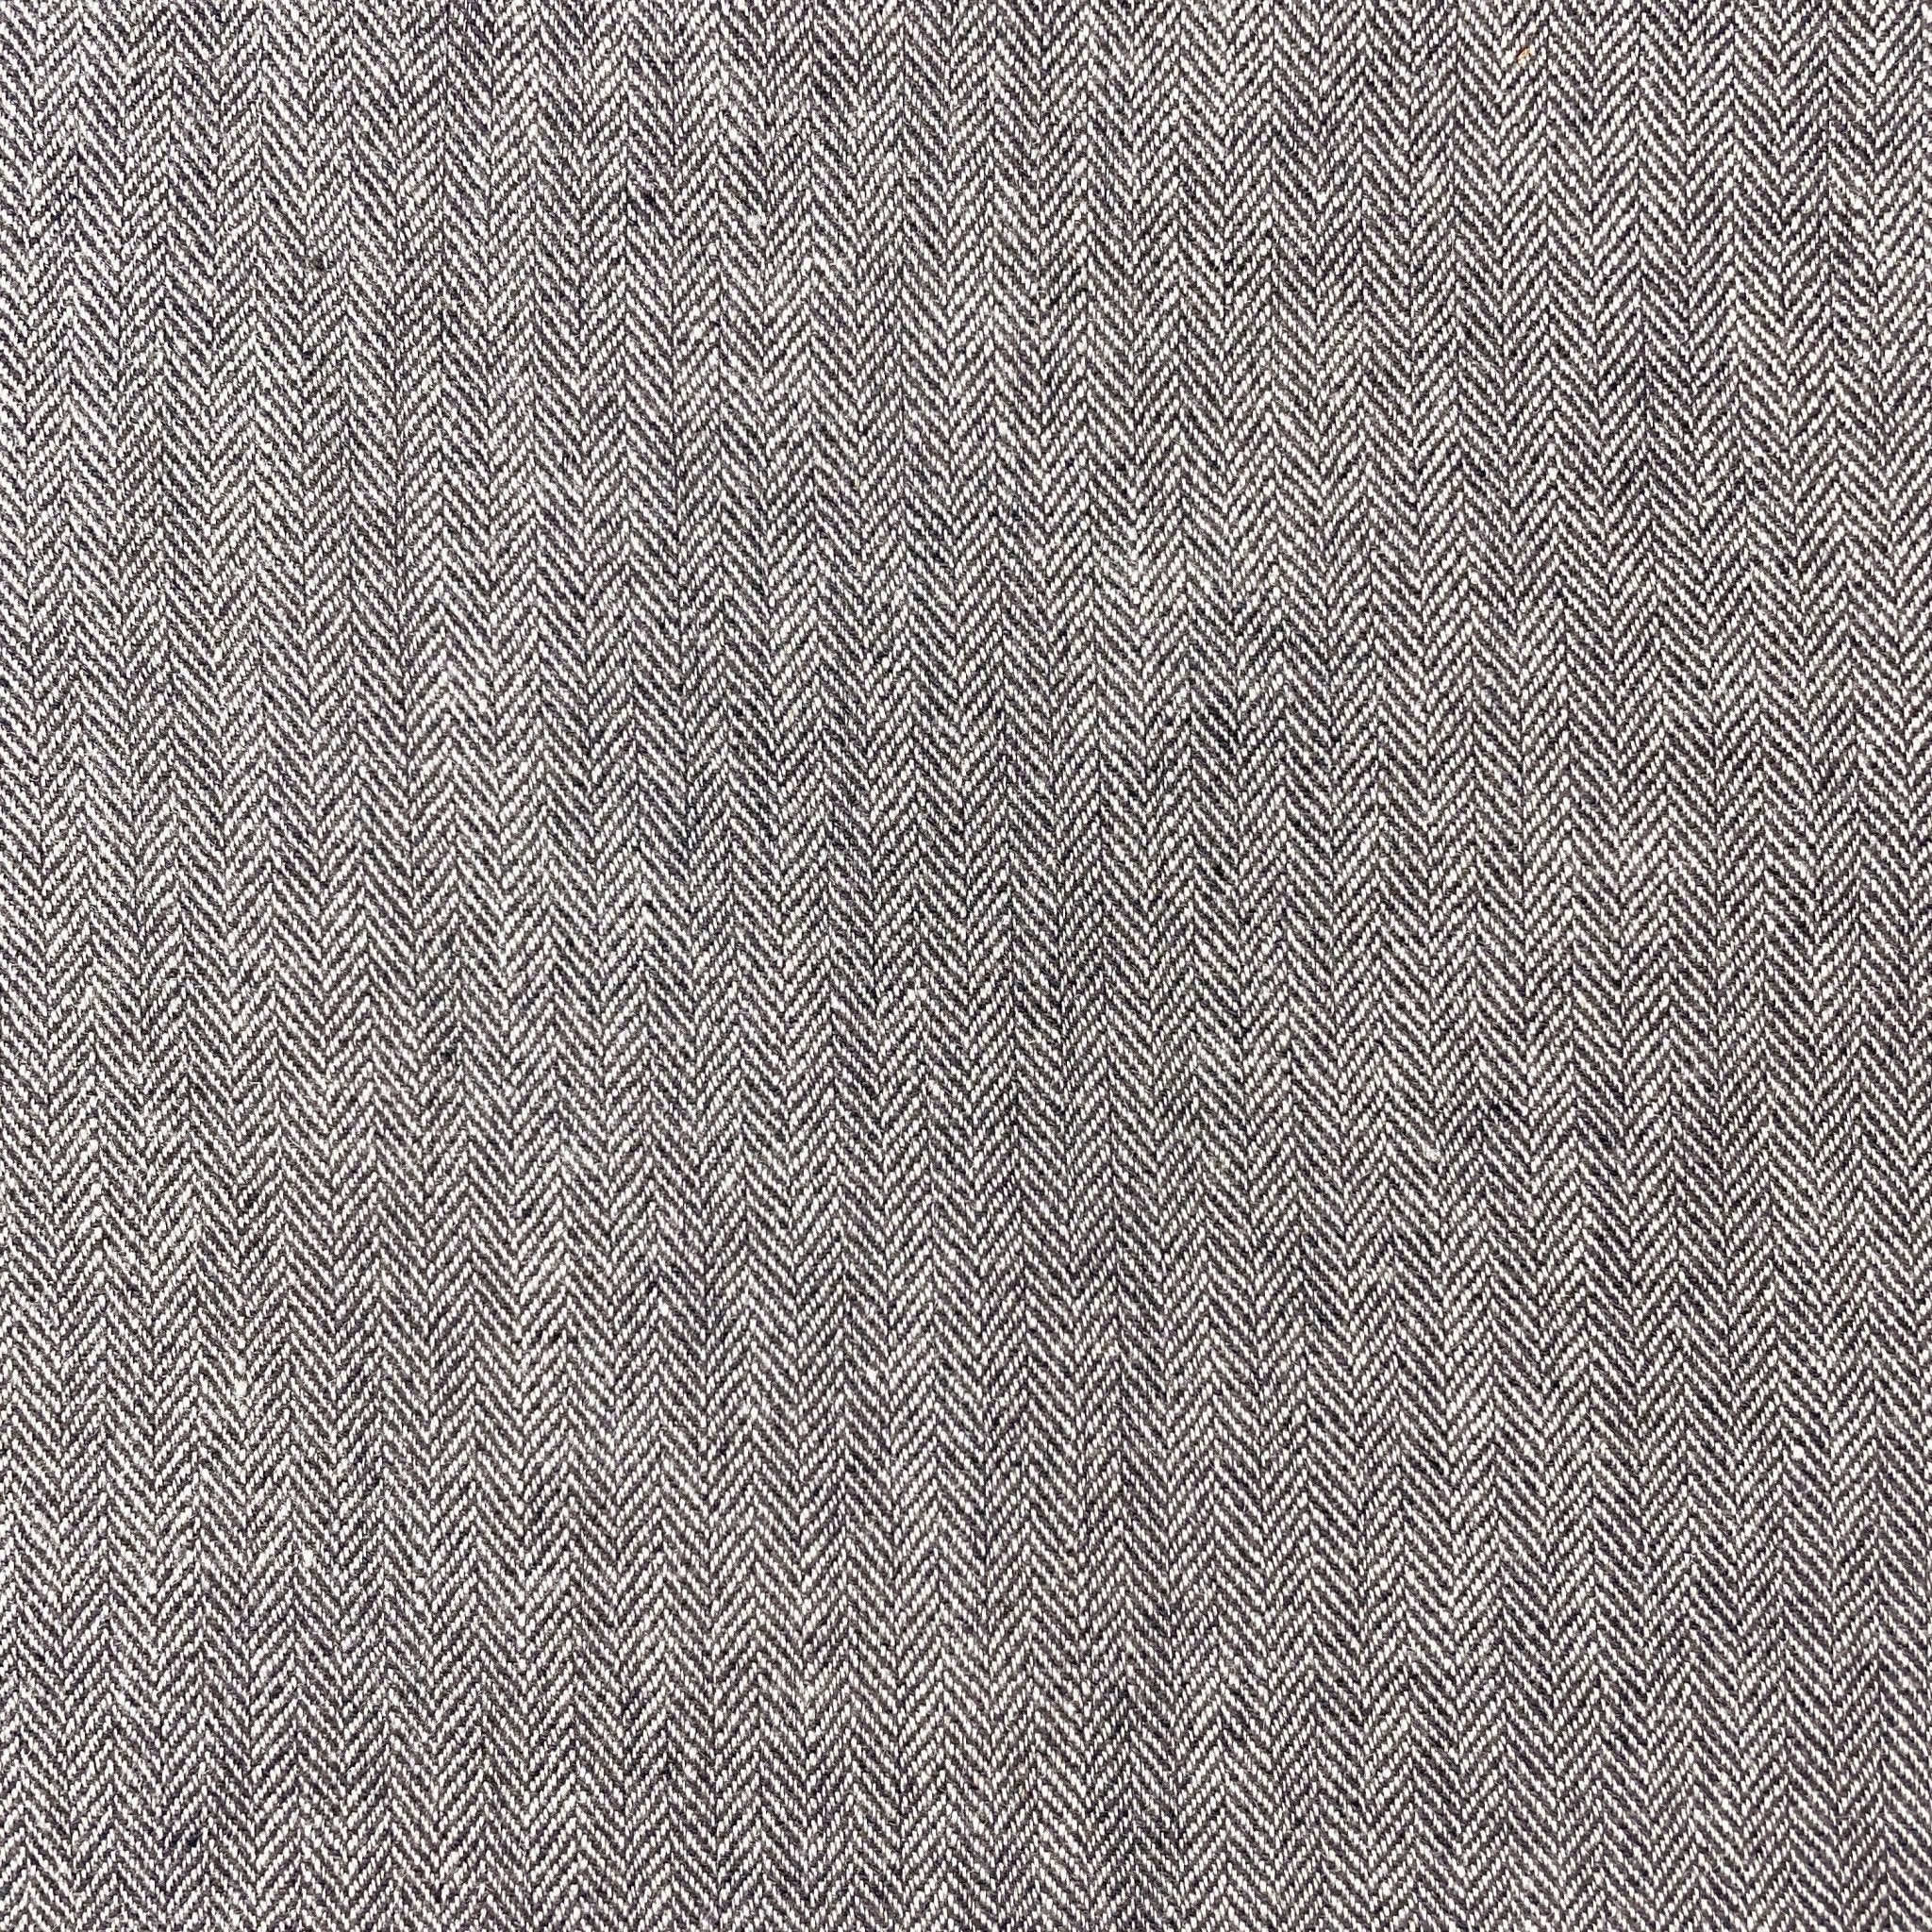 Linen Nylon Wool HBT Fabric 7009 7004 7013 7010 - The Linen Lab - 7009 GREY